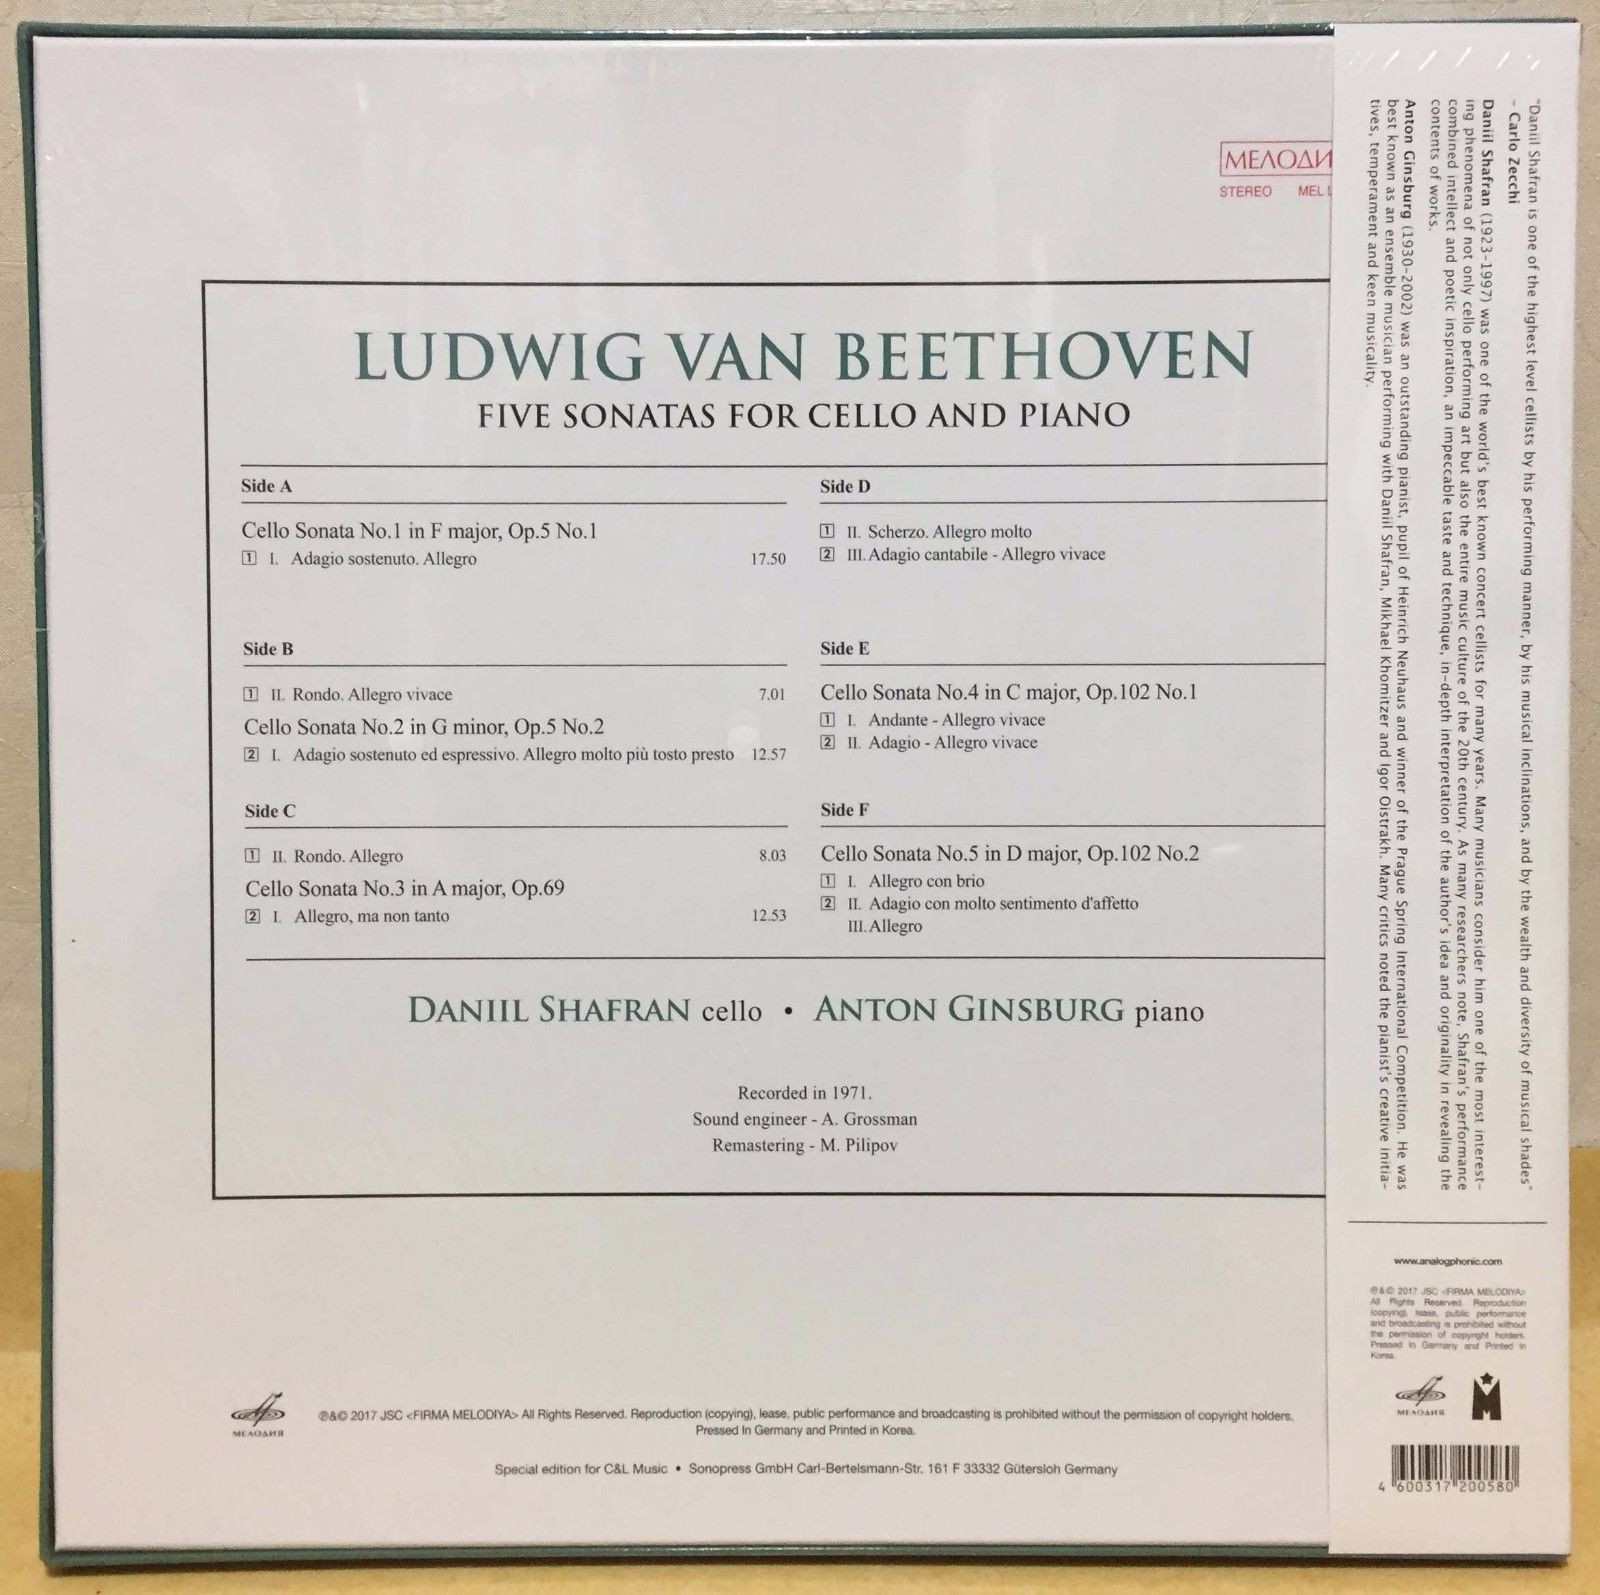 Beethoven - Five Sonatas for Cello and Piano (Daniil Shafran, Anton Ginsburg)